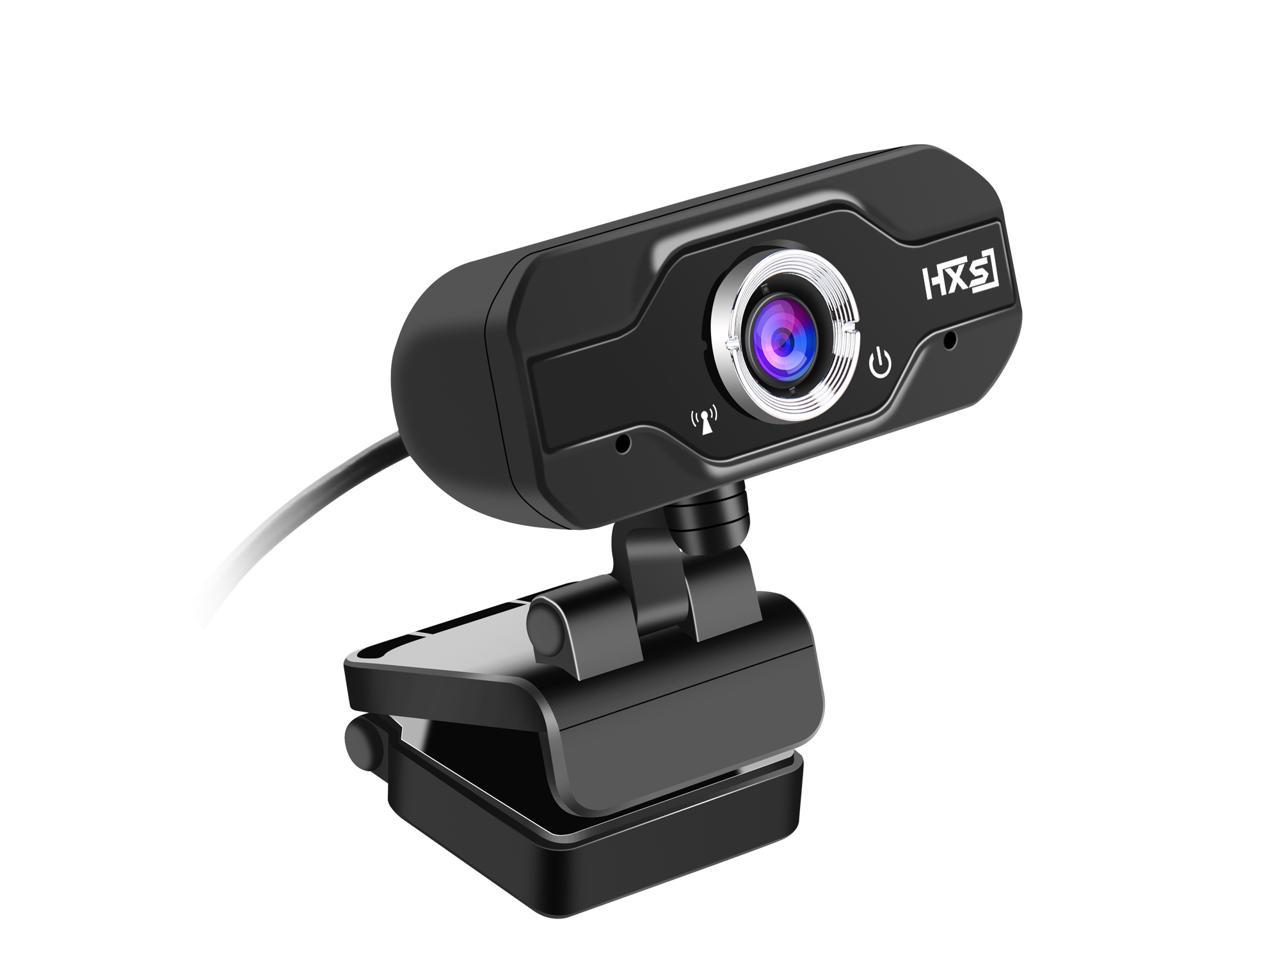 USB Computer Focusable Webcam for Gaming Conferencing & Working Free-Driver Installer Laptop or Desktop Webcam JJKK 720P HD Webcam with Built-in Microphone 